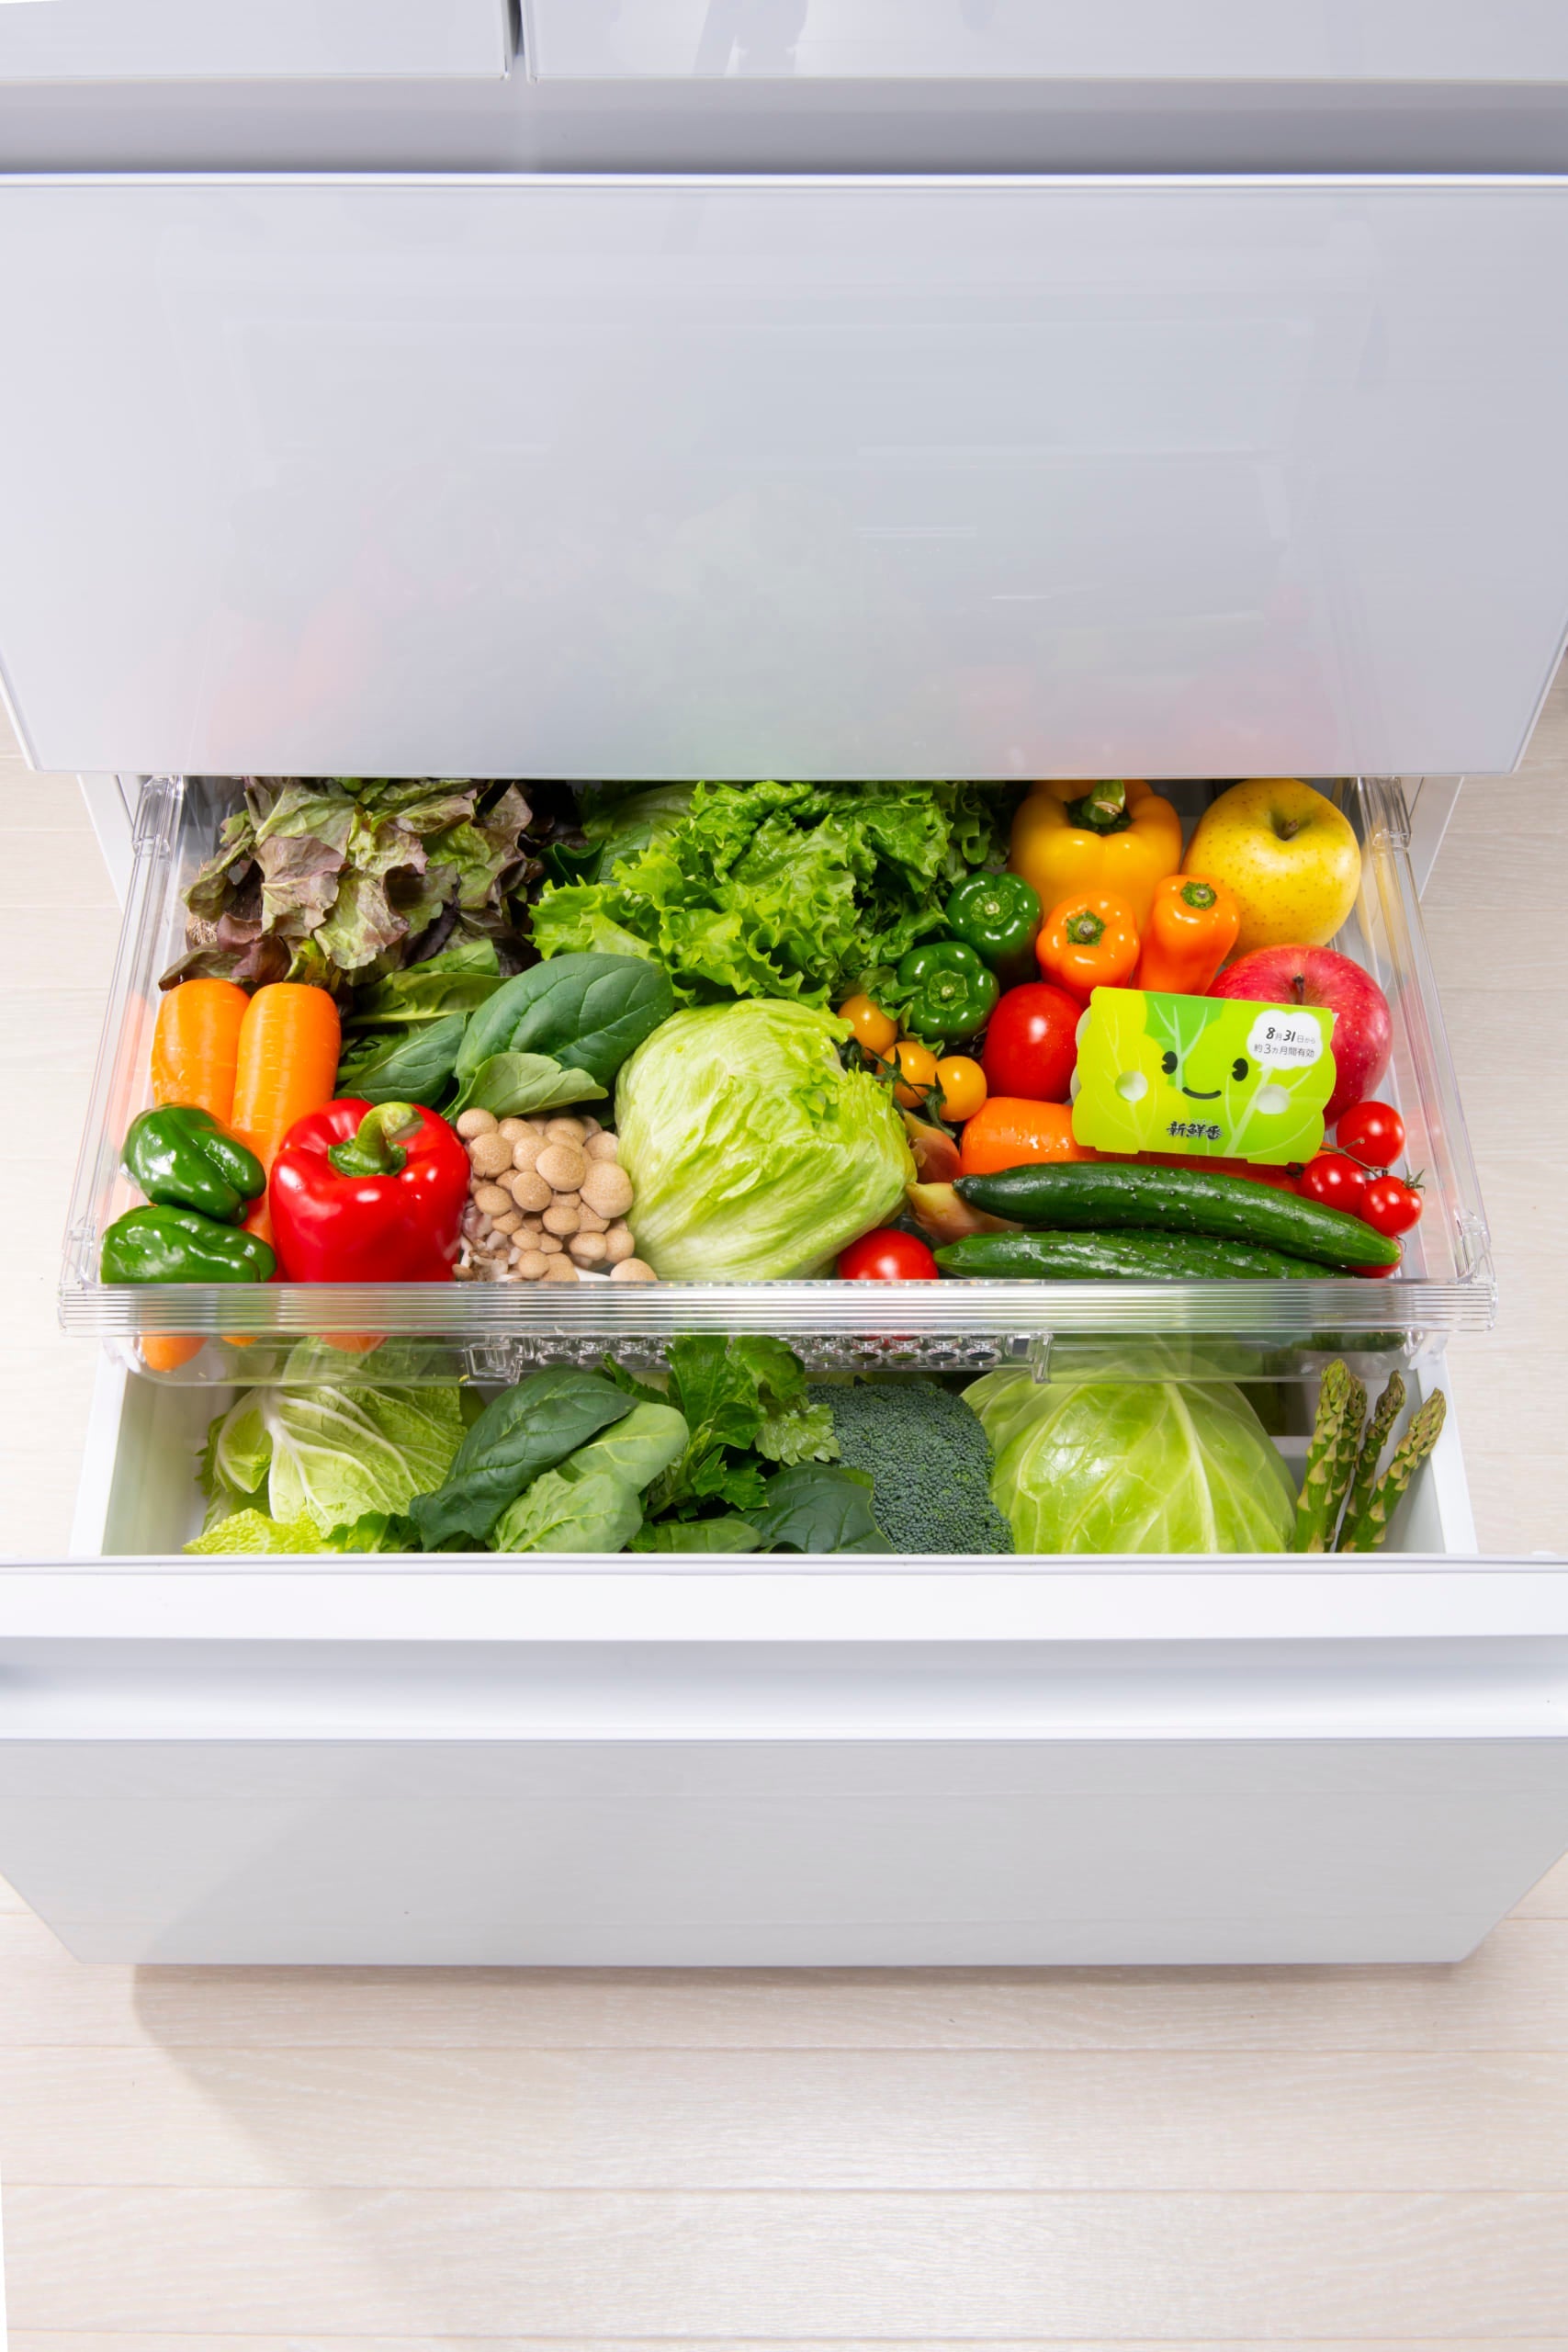 S.T 冷藏蔬菜长效保鲜块 新品专利申请中（碳酸气延缓蔬菜氧化，减少水分流水，有效3个月）